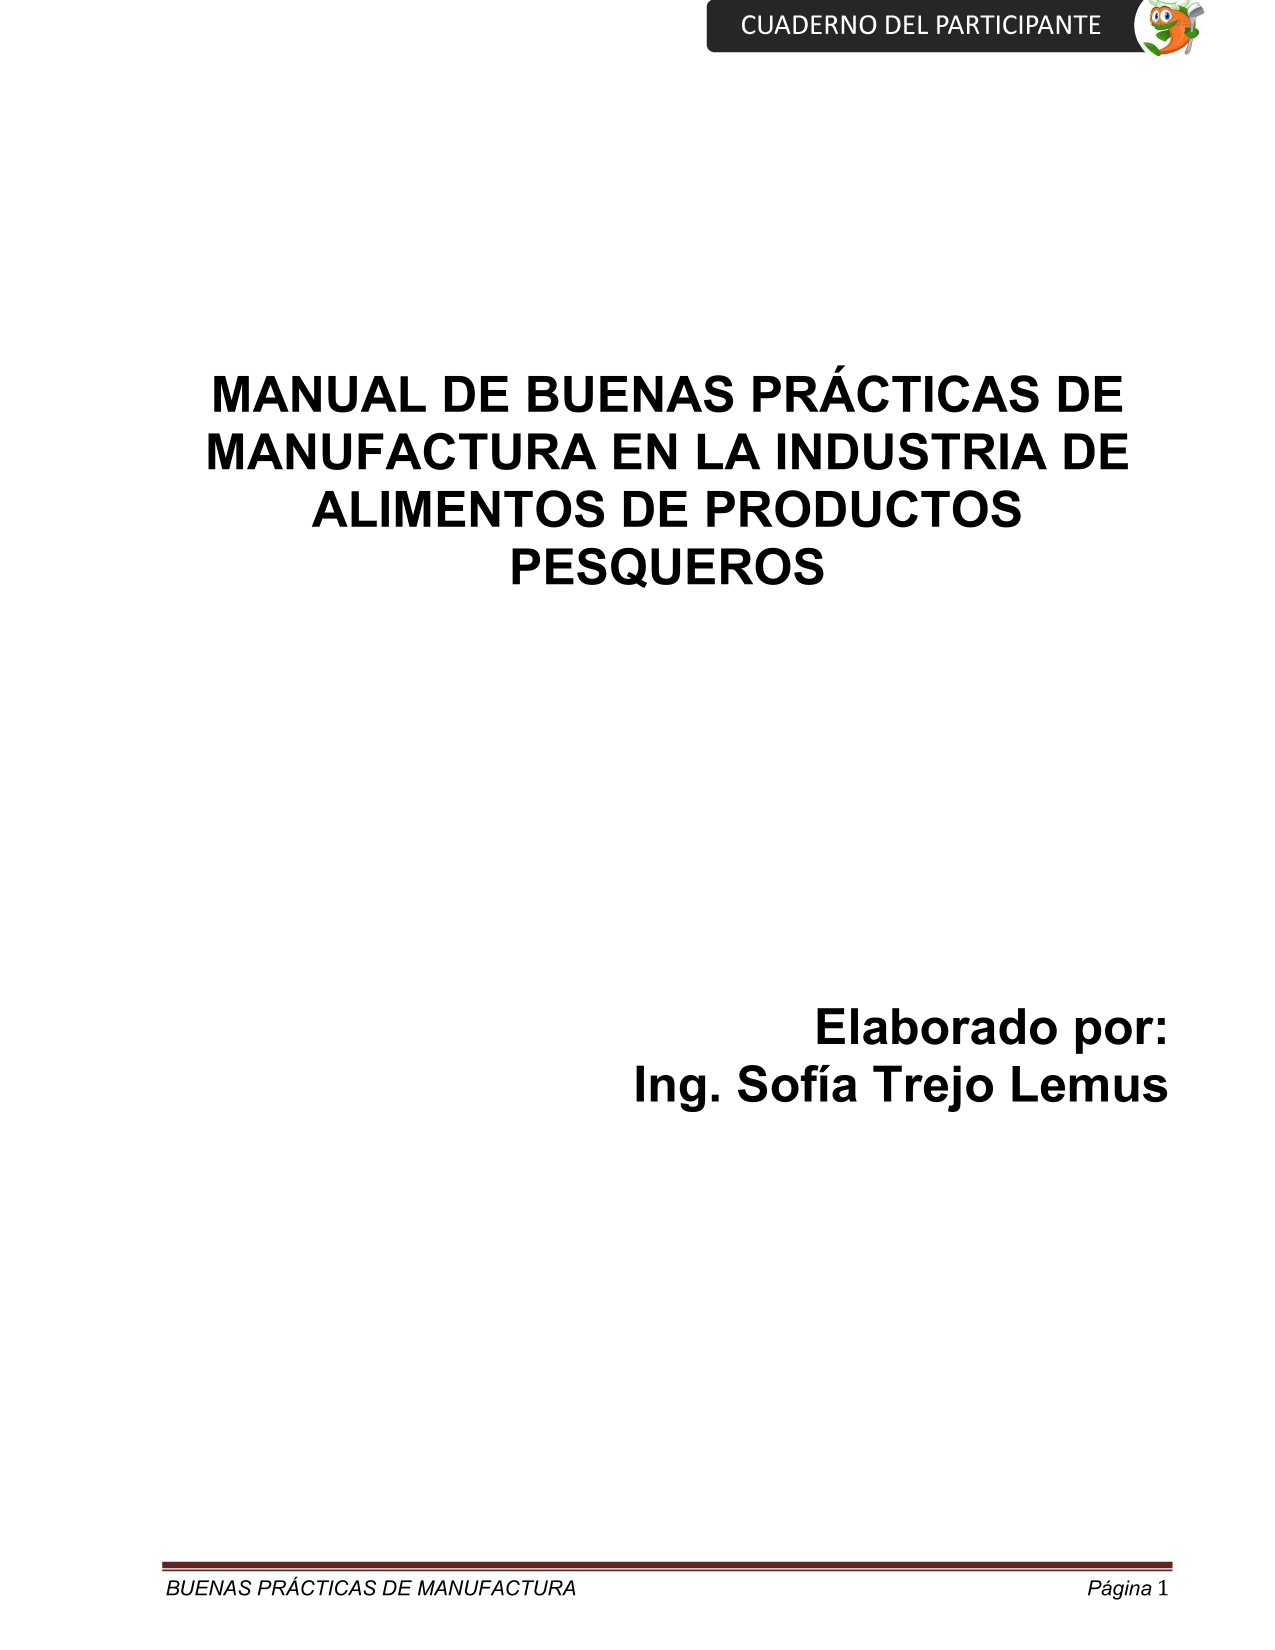 /cms/uploads/image/file/823158/Manual_BuenasPracticasManufactura.jpg